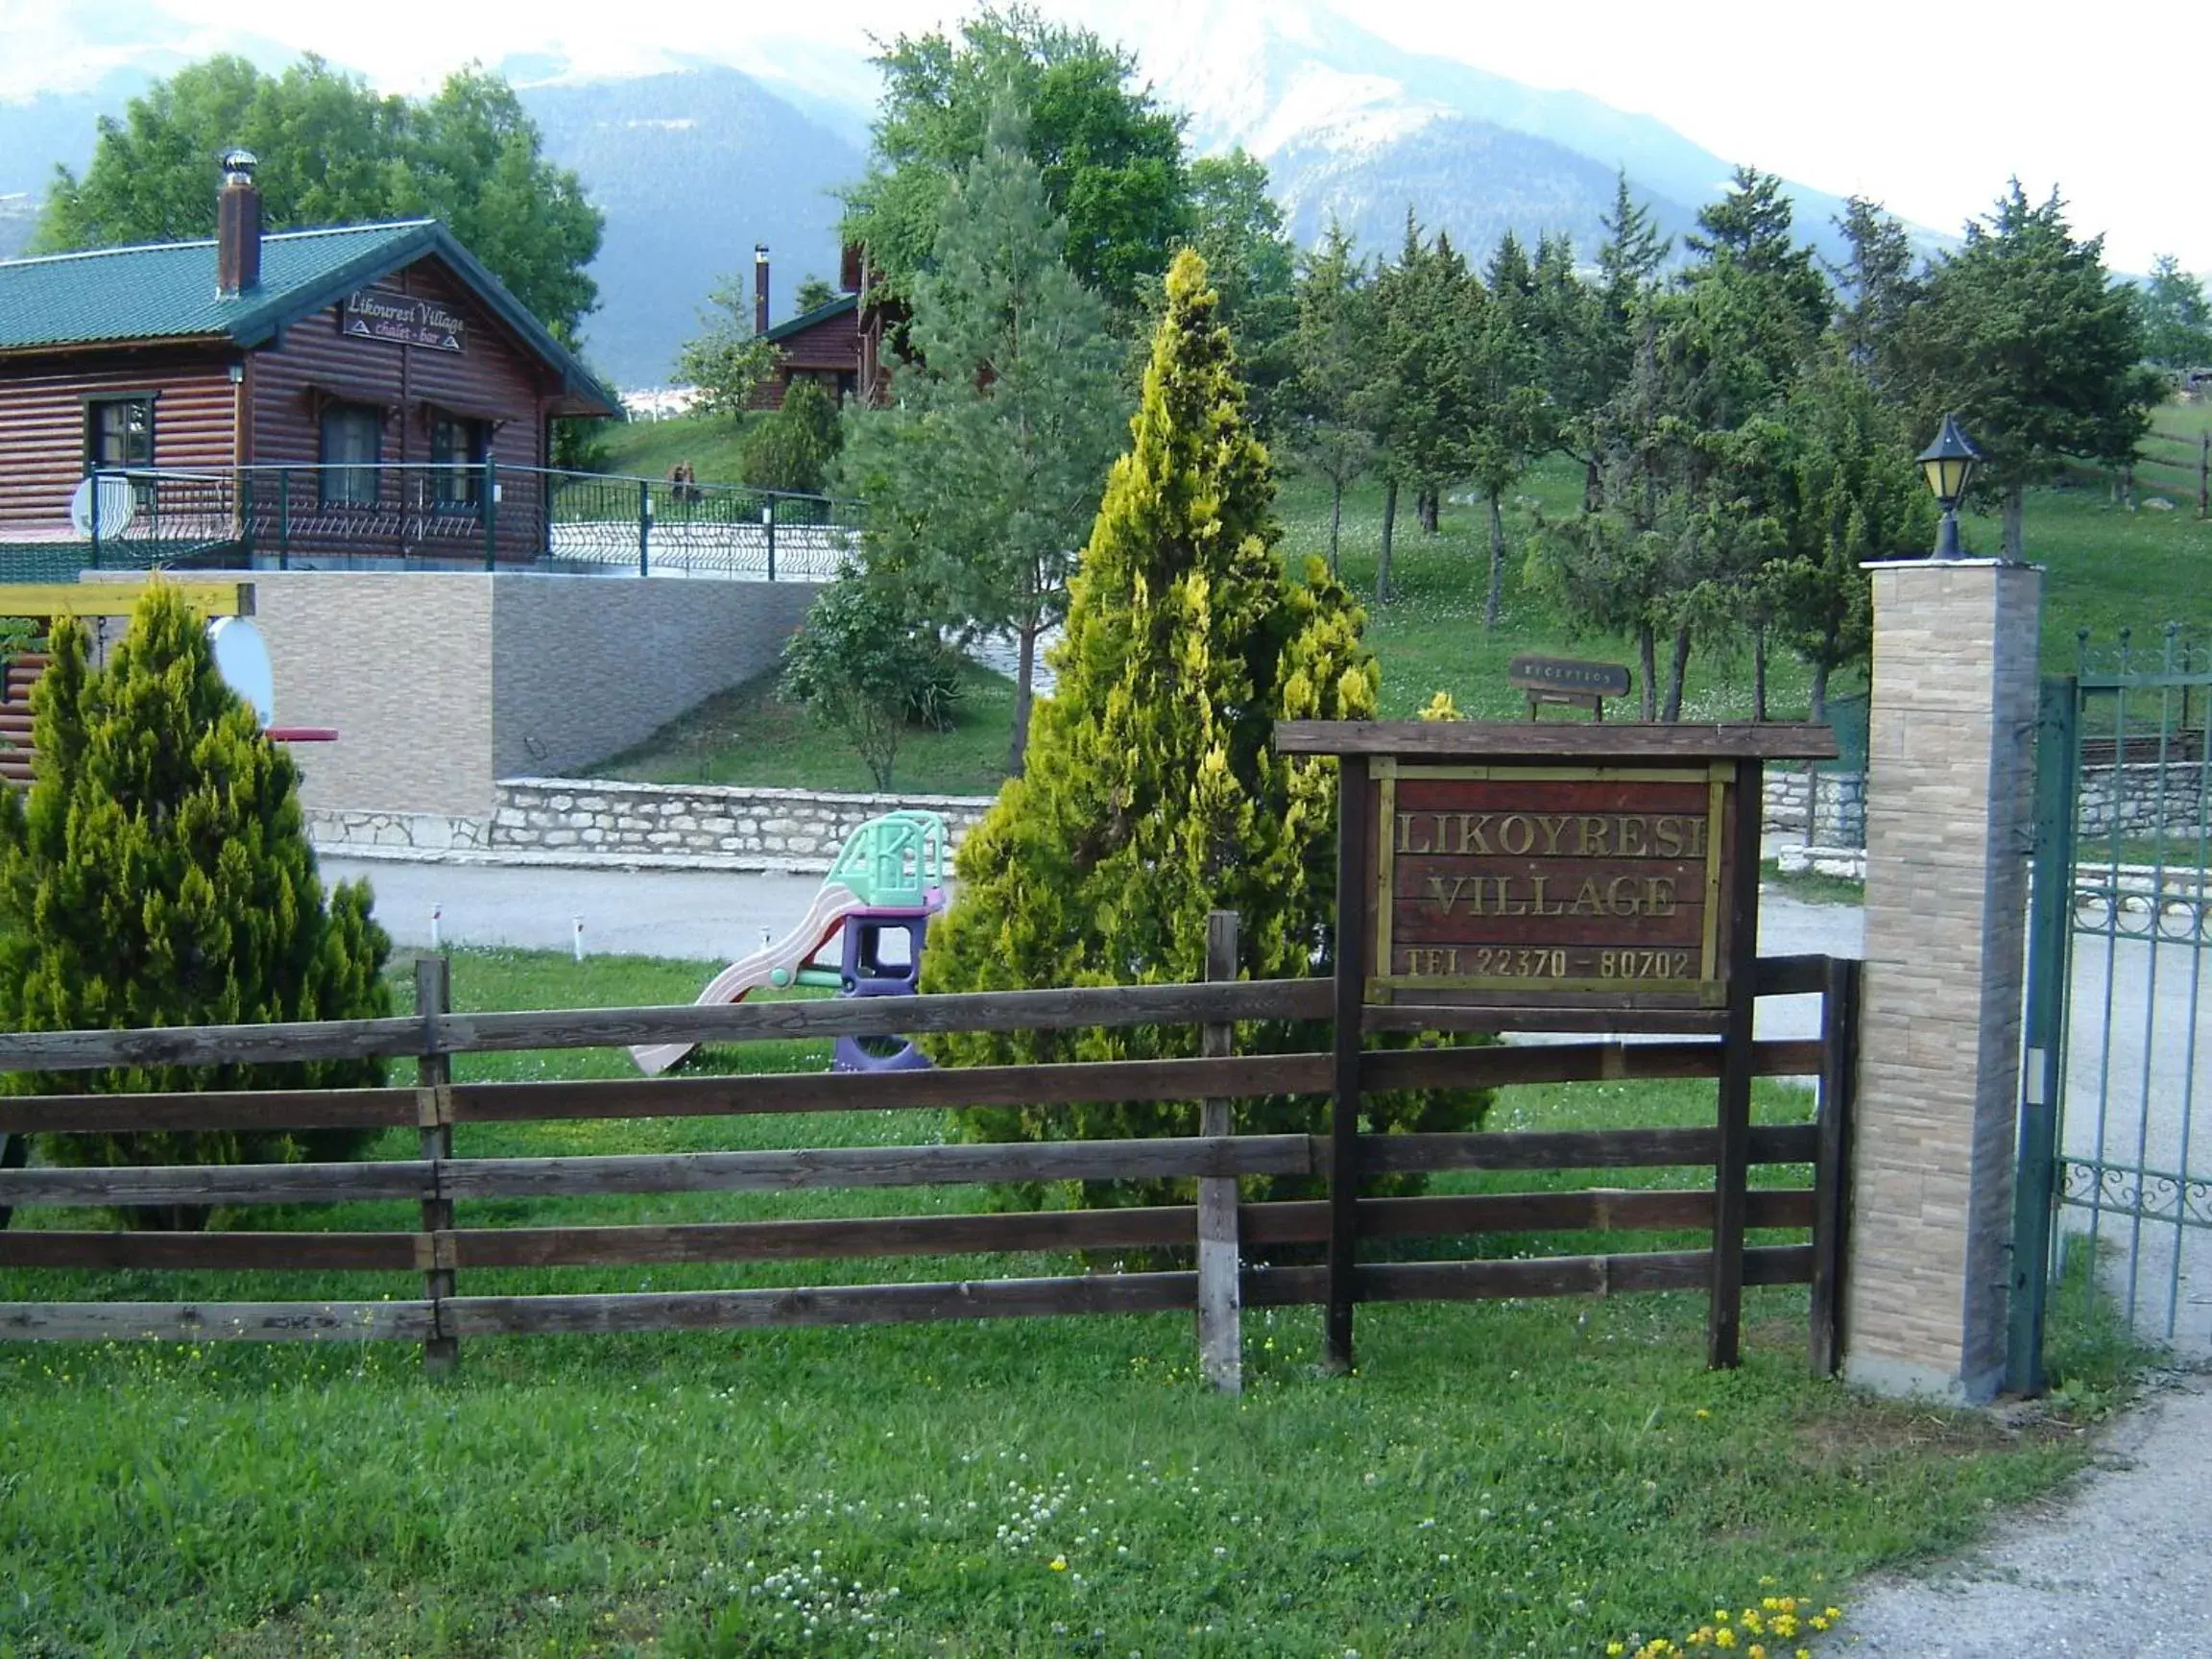 Property building in Chalet Likouresi Village